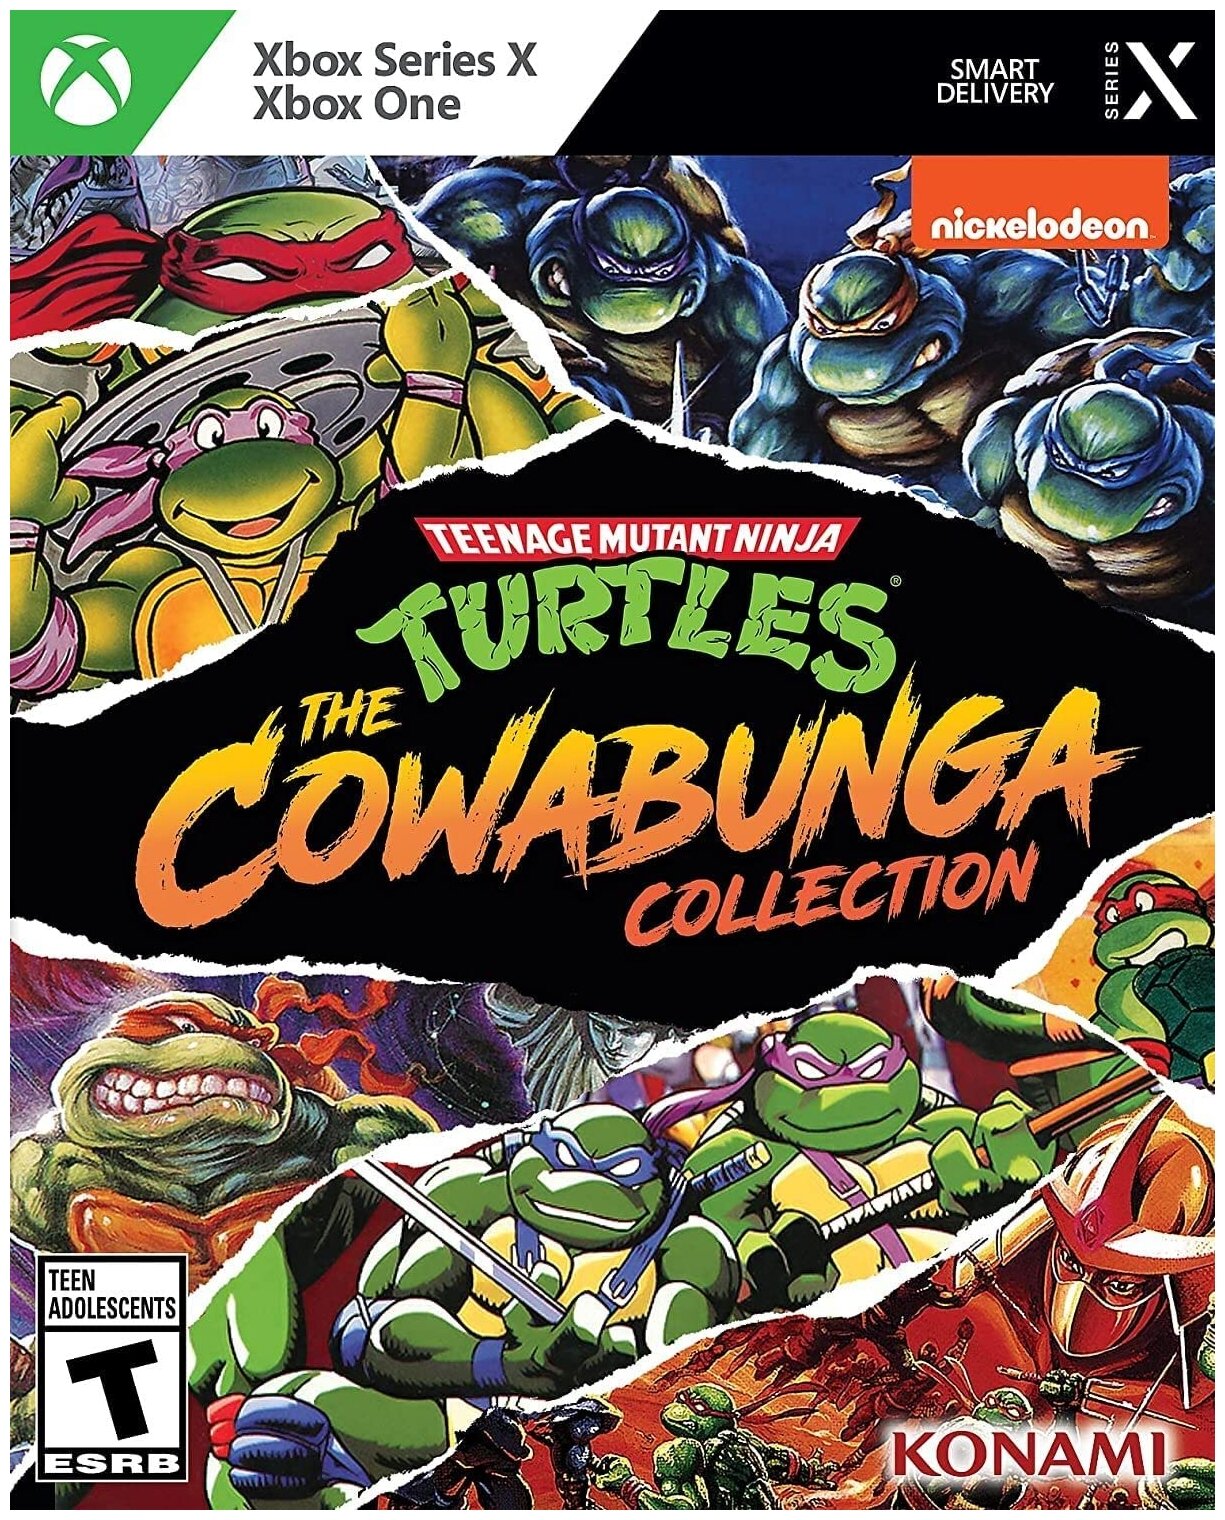 Игра Teenage Mutant Ninja Turtles: The Cowabunga Collection